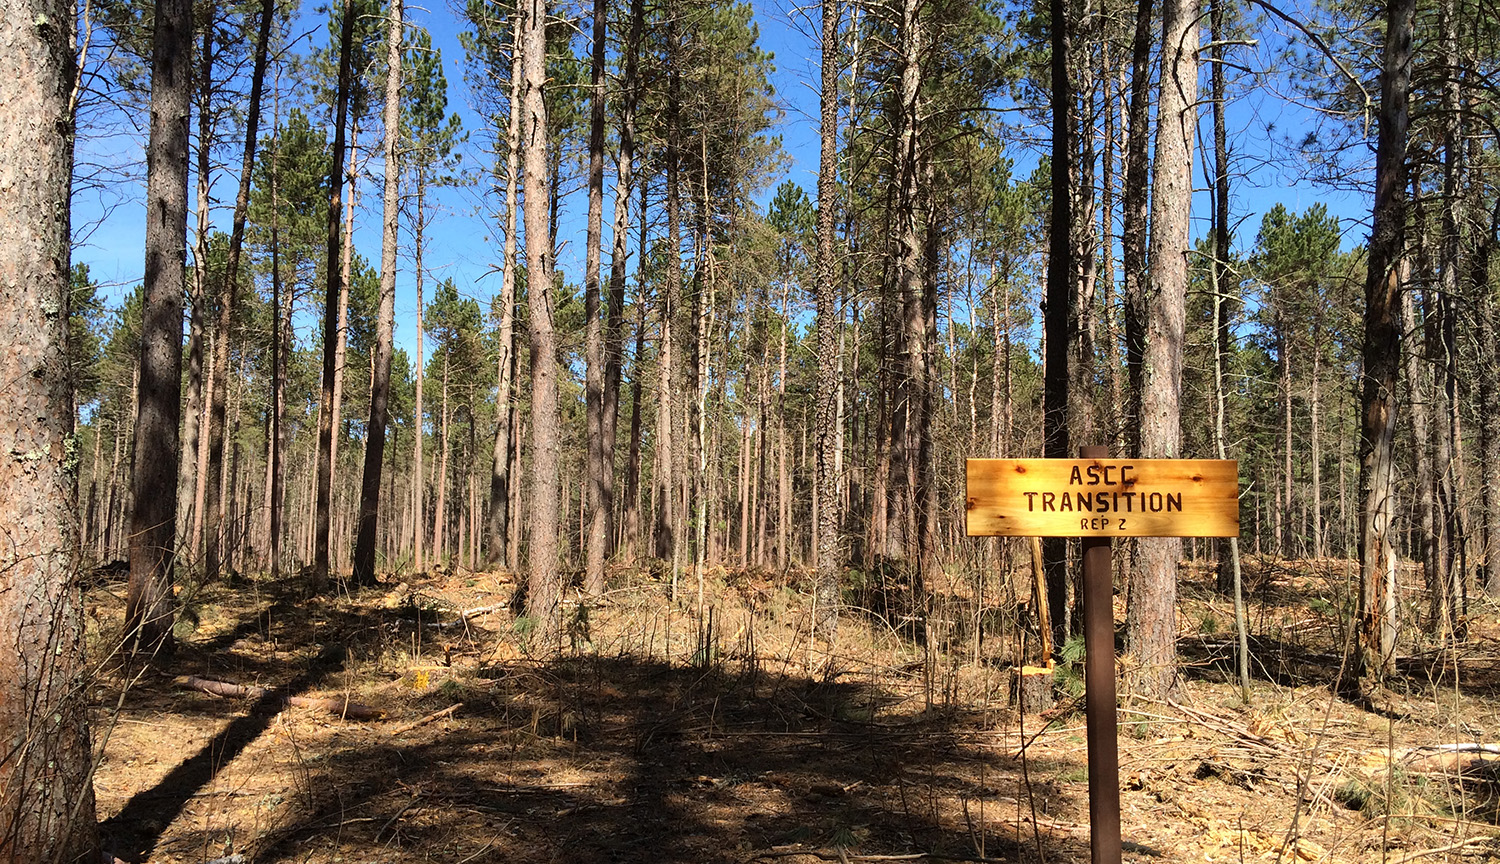 Foto de un bosque de coníferas. Un cartel dice “ASCC TRANSITION.”